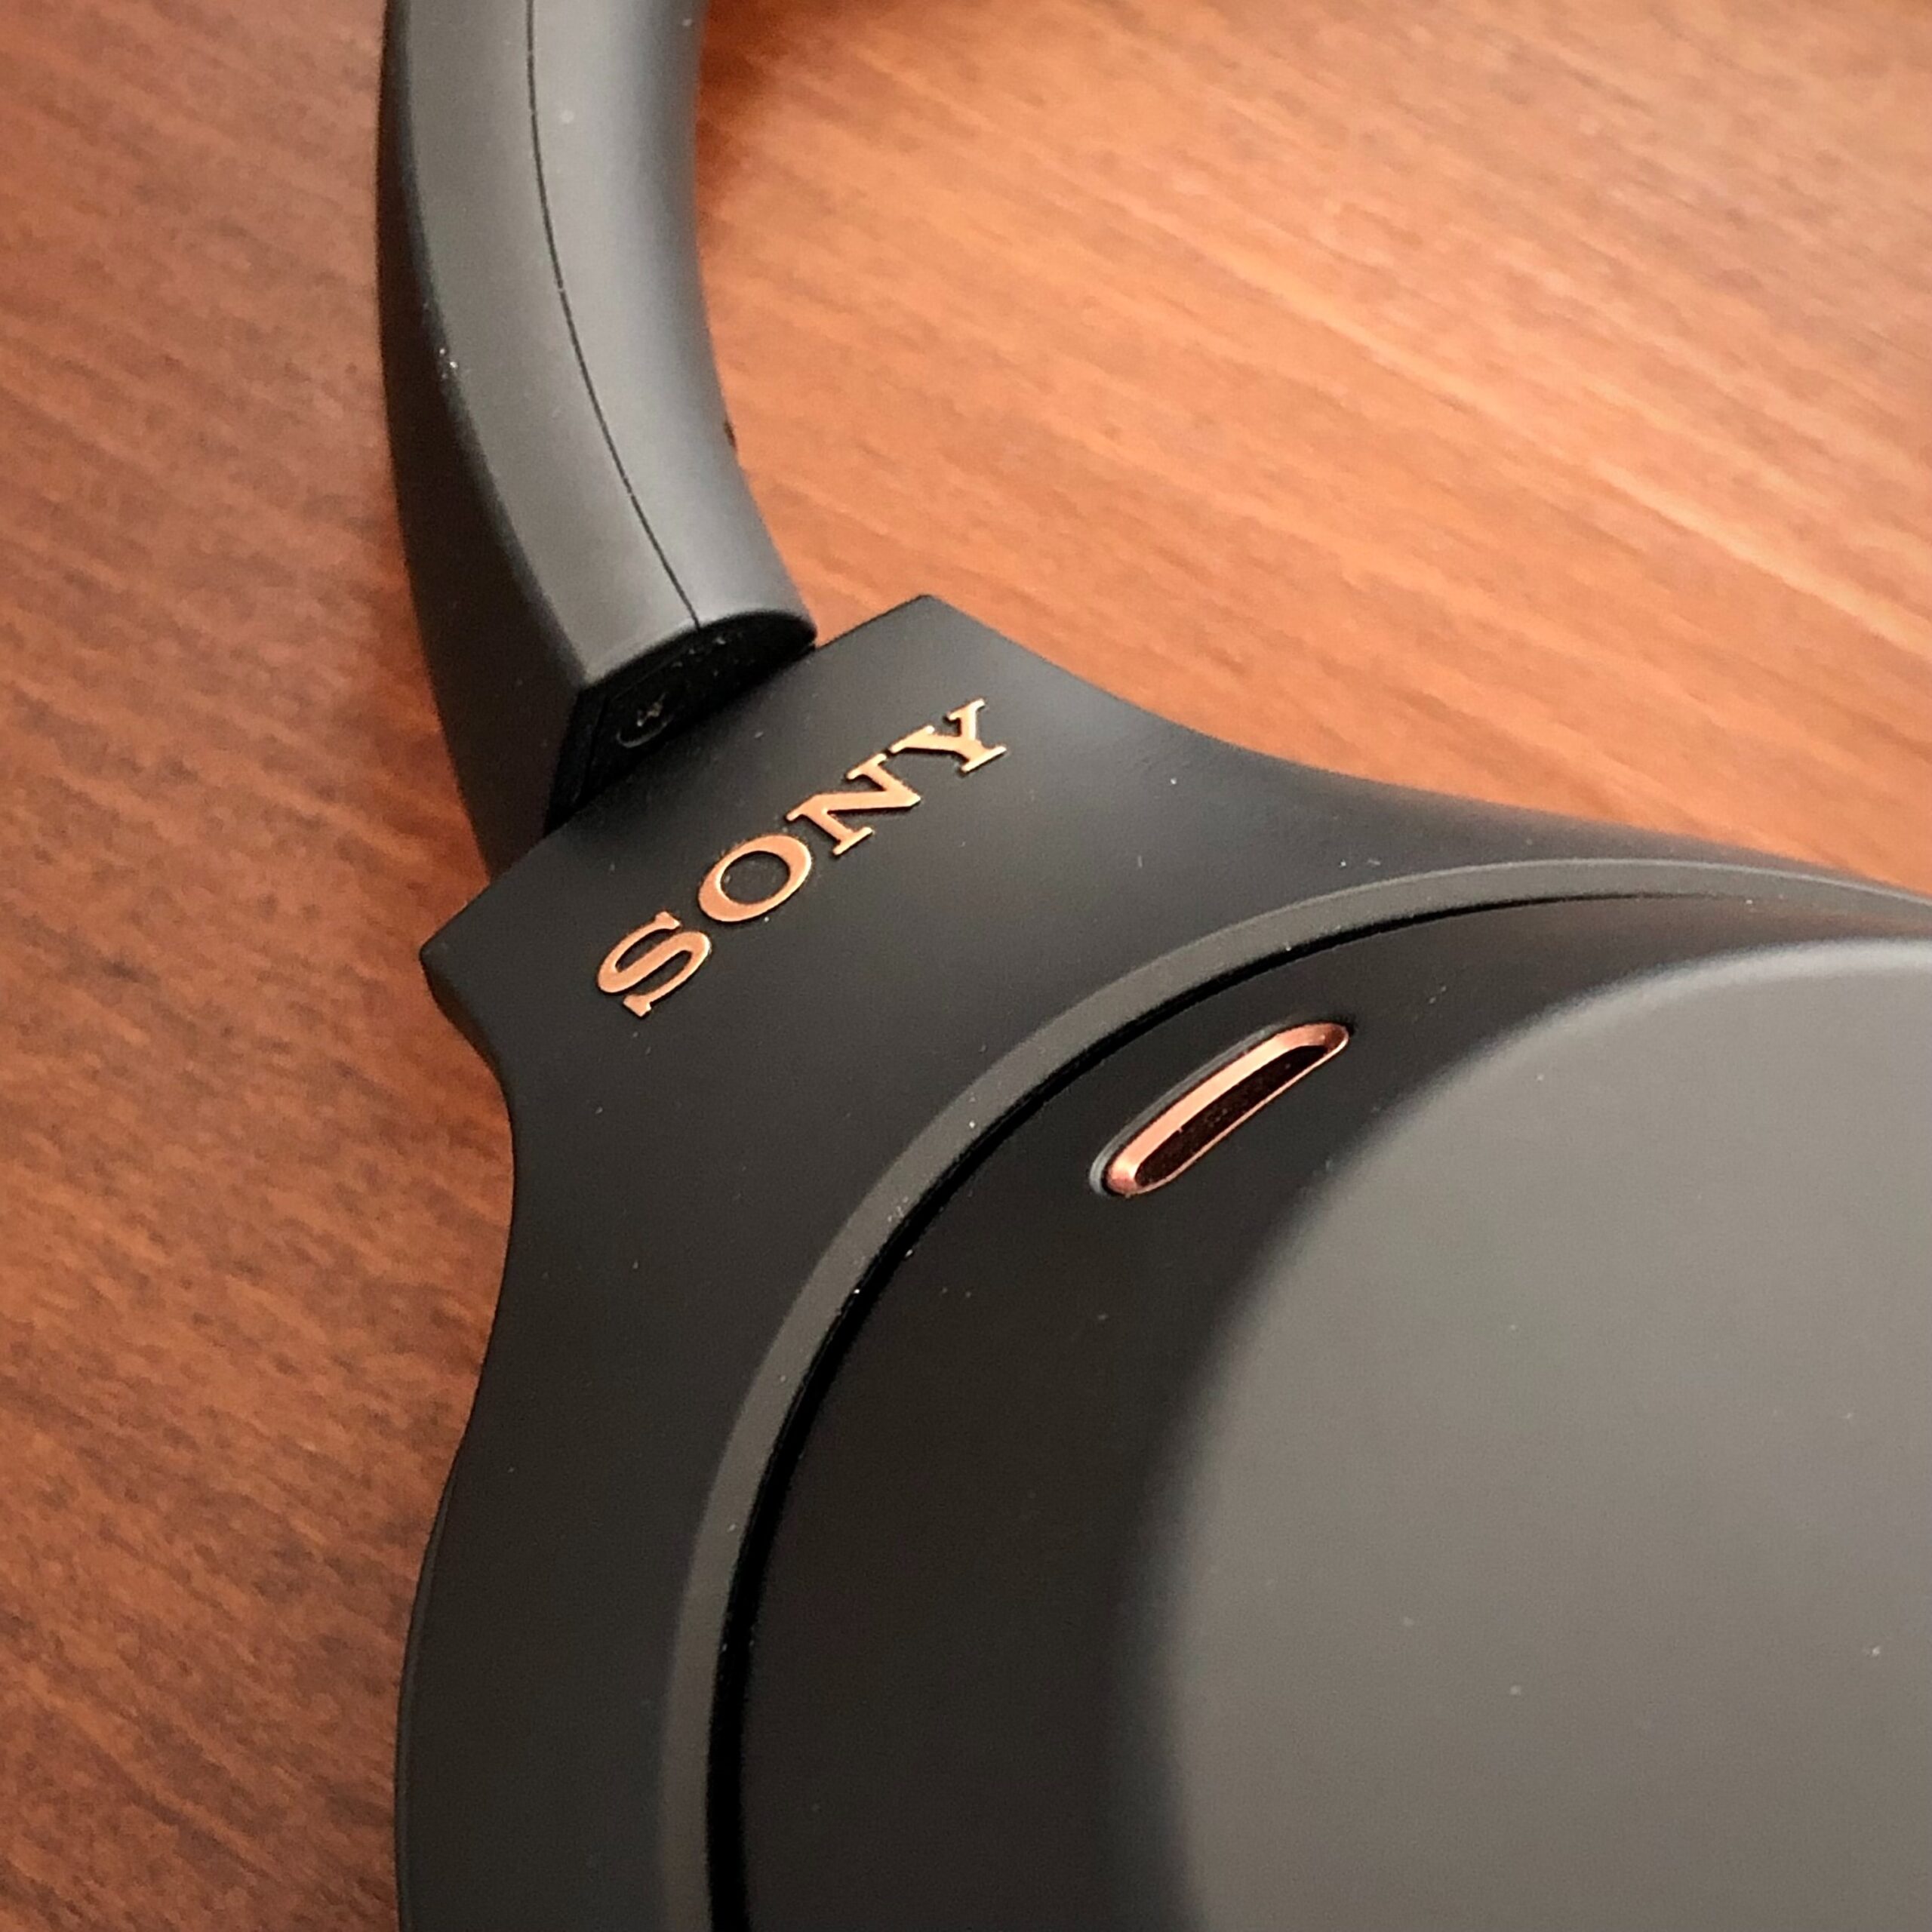 Sony Headphones Black Friday